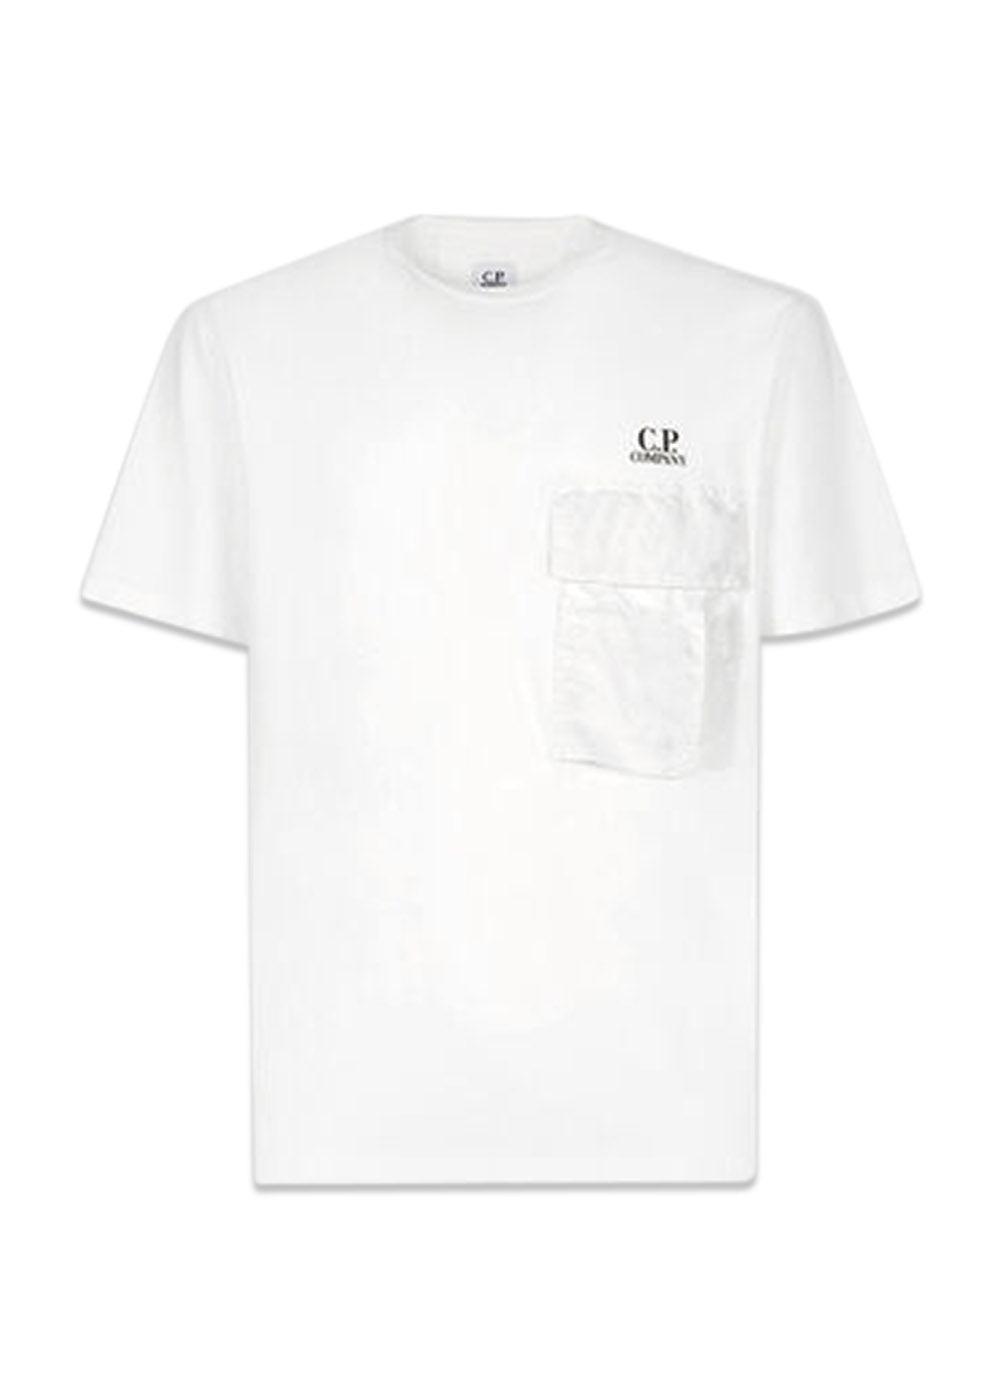 C.P. Companys T-Shirts - Short Sleeve Jersey 20/1 - Gauze White. Køb t-shirts her.